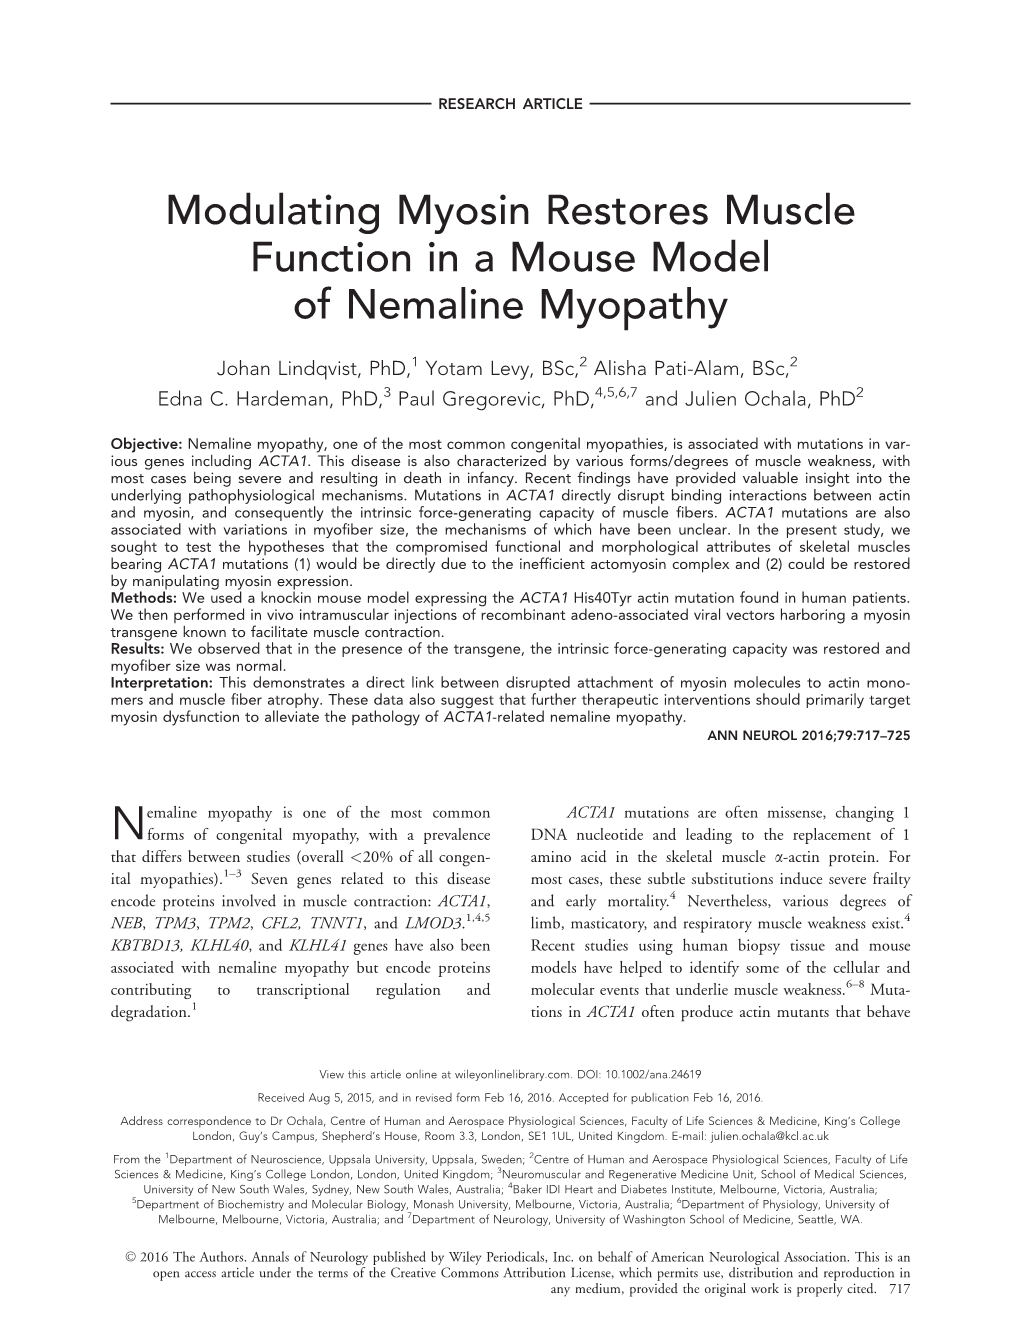 Modulating Myosin Restores Muscle Function in a Mouse Model of Nemaline Myopathy